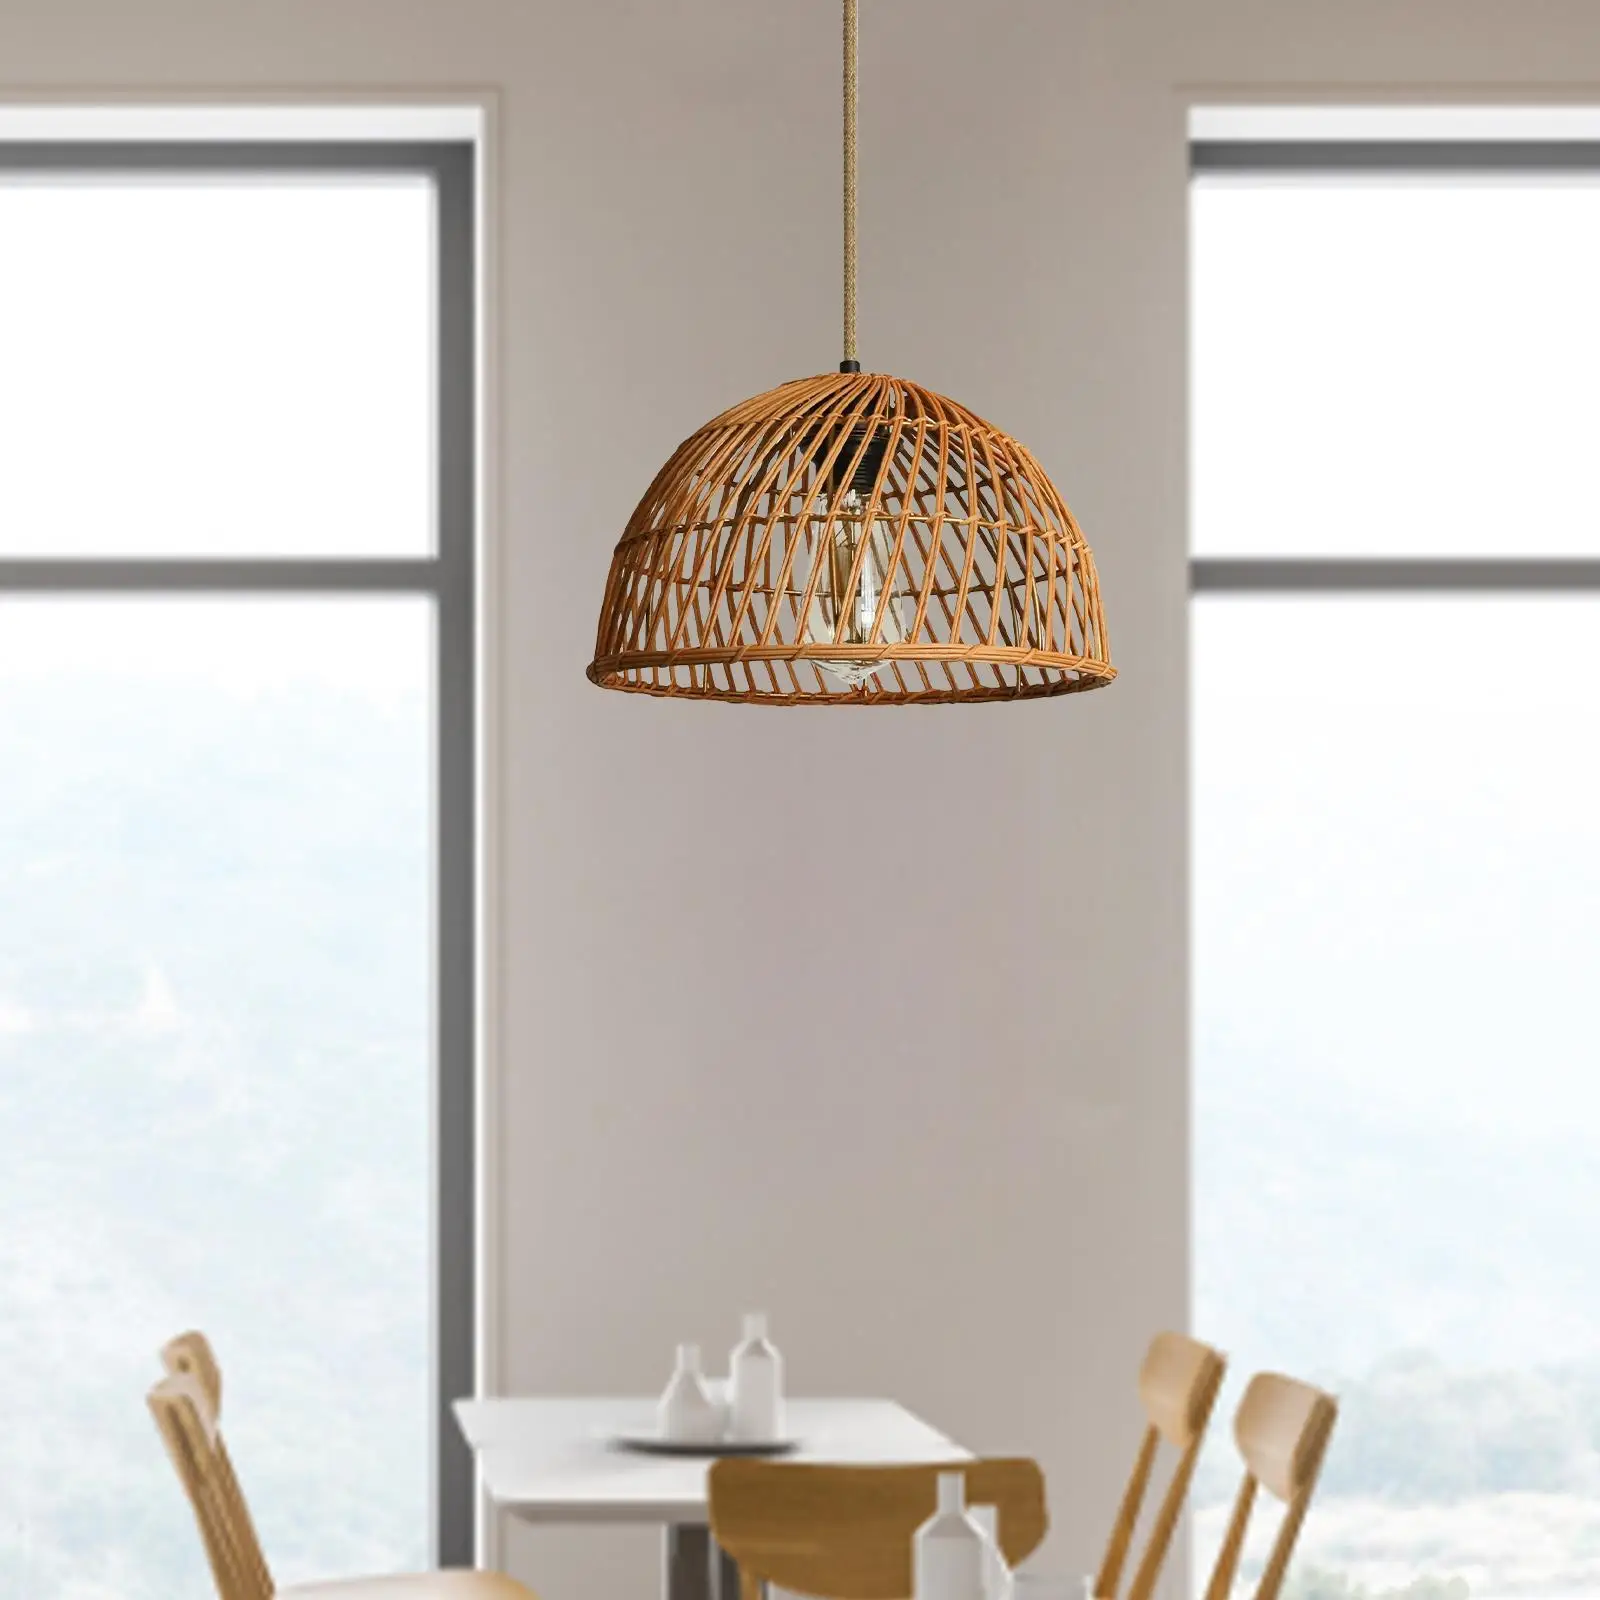 Retro Antique Pendant Lamp Shade Ceiling Light Fixture Lamp Shade Dome Hanging Ceiling Lampshade for Kitchen Bar Bedroom Cafe